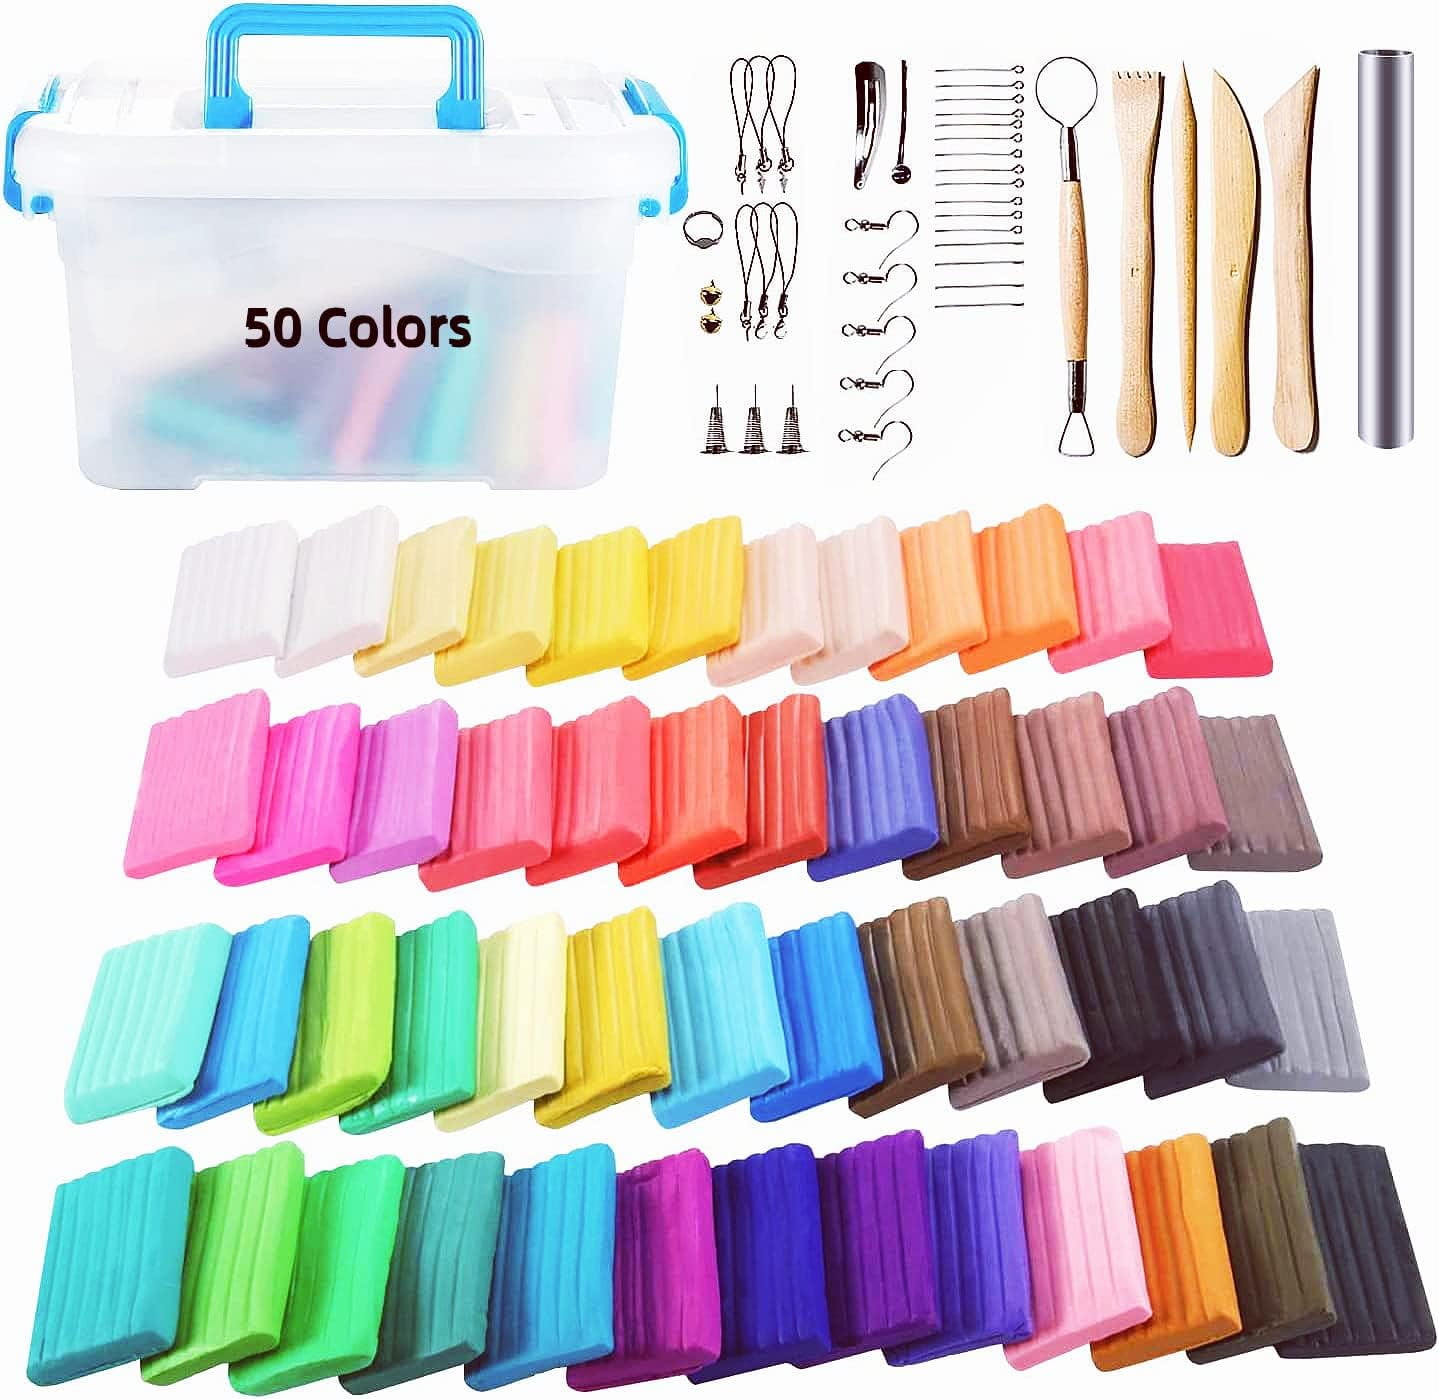 Polymer Clay Starter Kit,CiaraQ 60 Colors (1oz / Block) Oven Bake